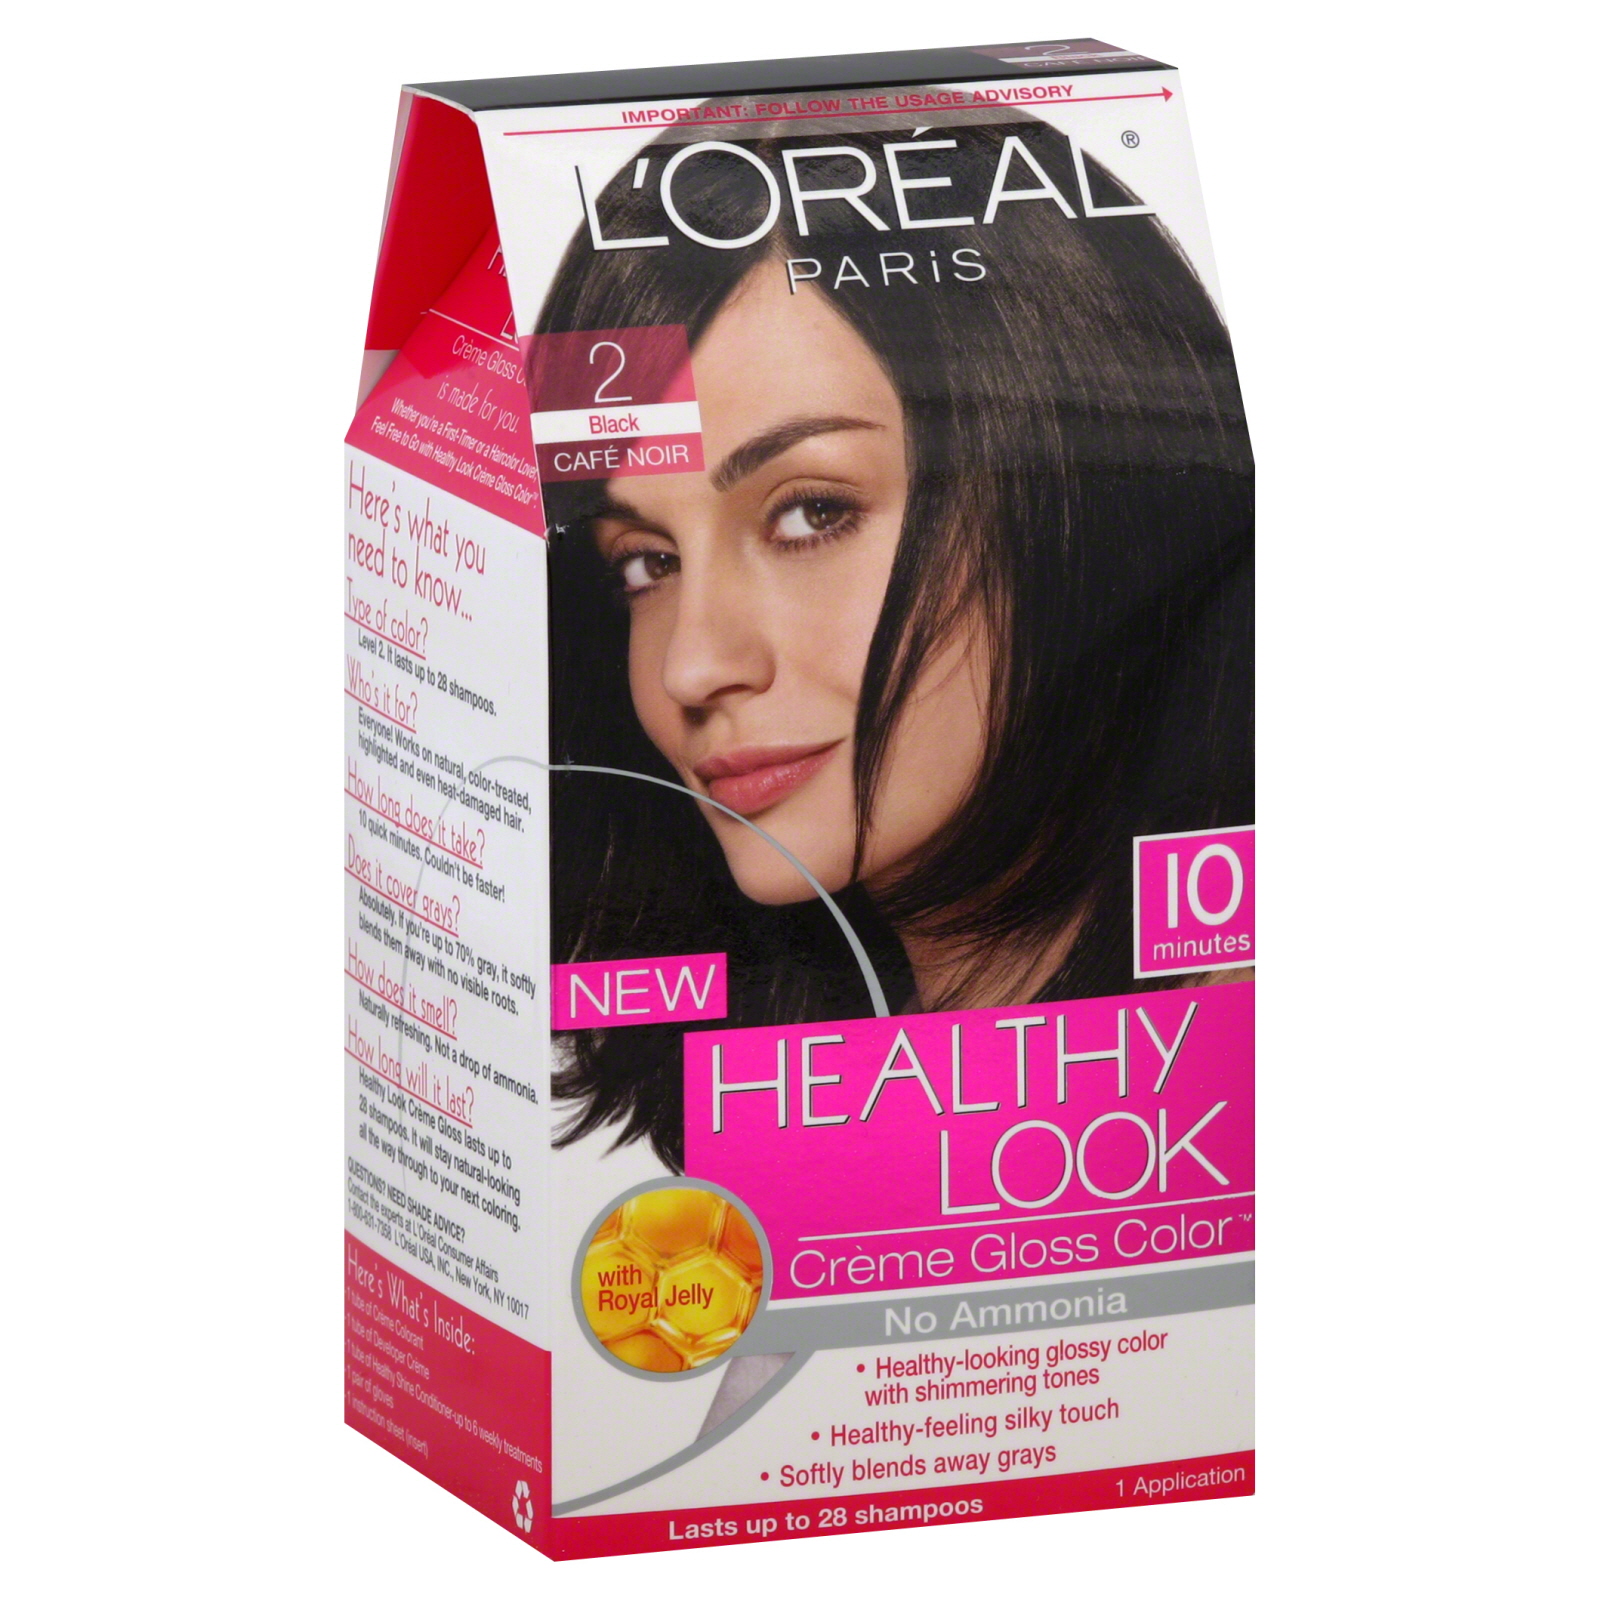 L'Oreal Healthy Look Hair Dye, Creme Gloss Color, Black 2, 1 application